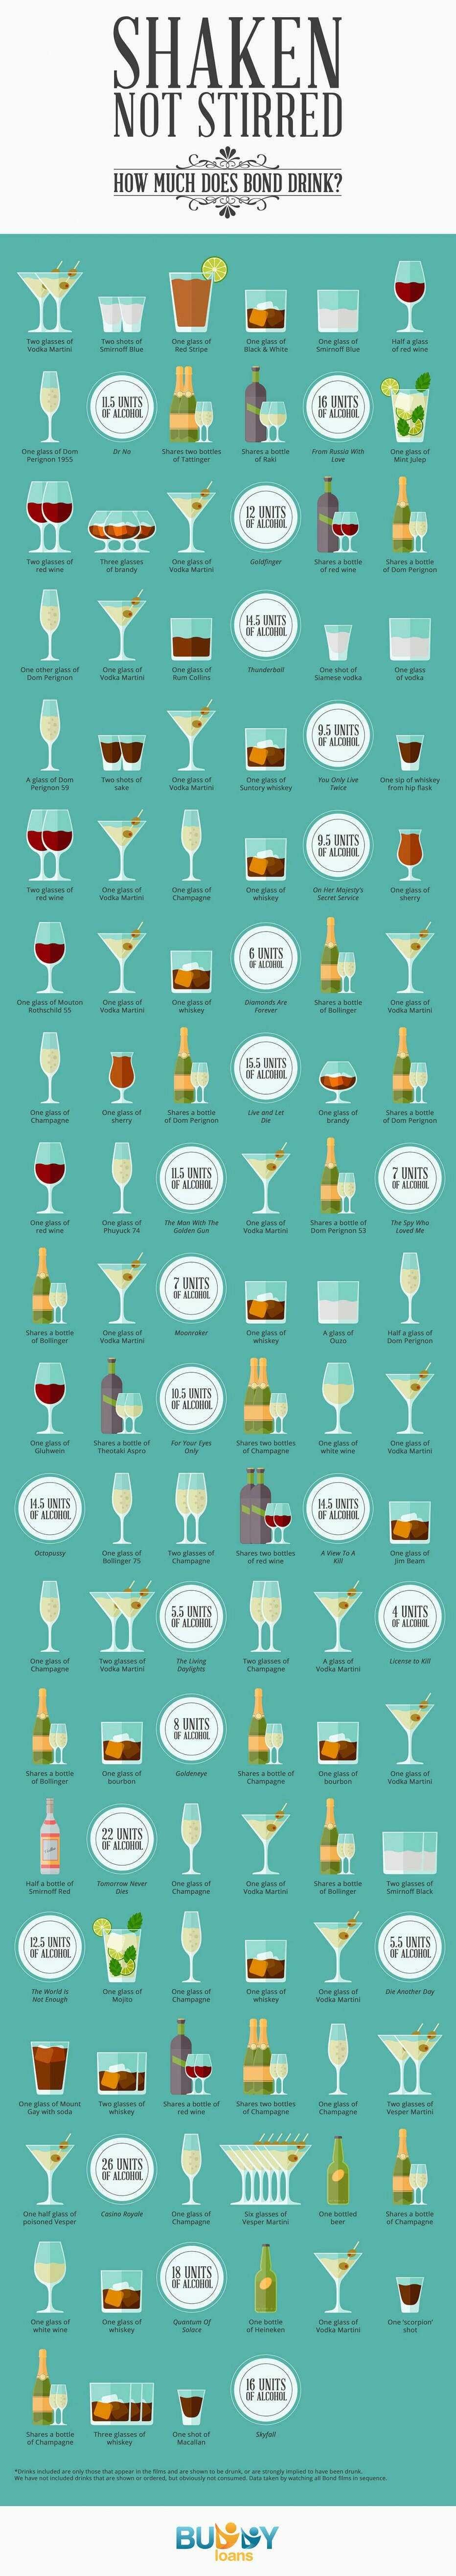 How Much Does James Bond Drink In Each Film? - Infographic - Thrillist